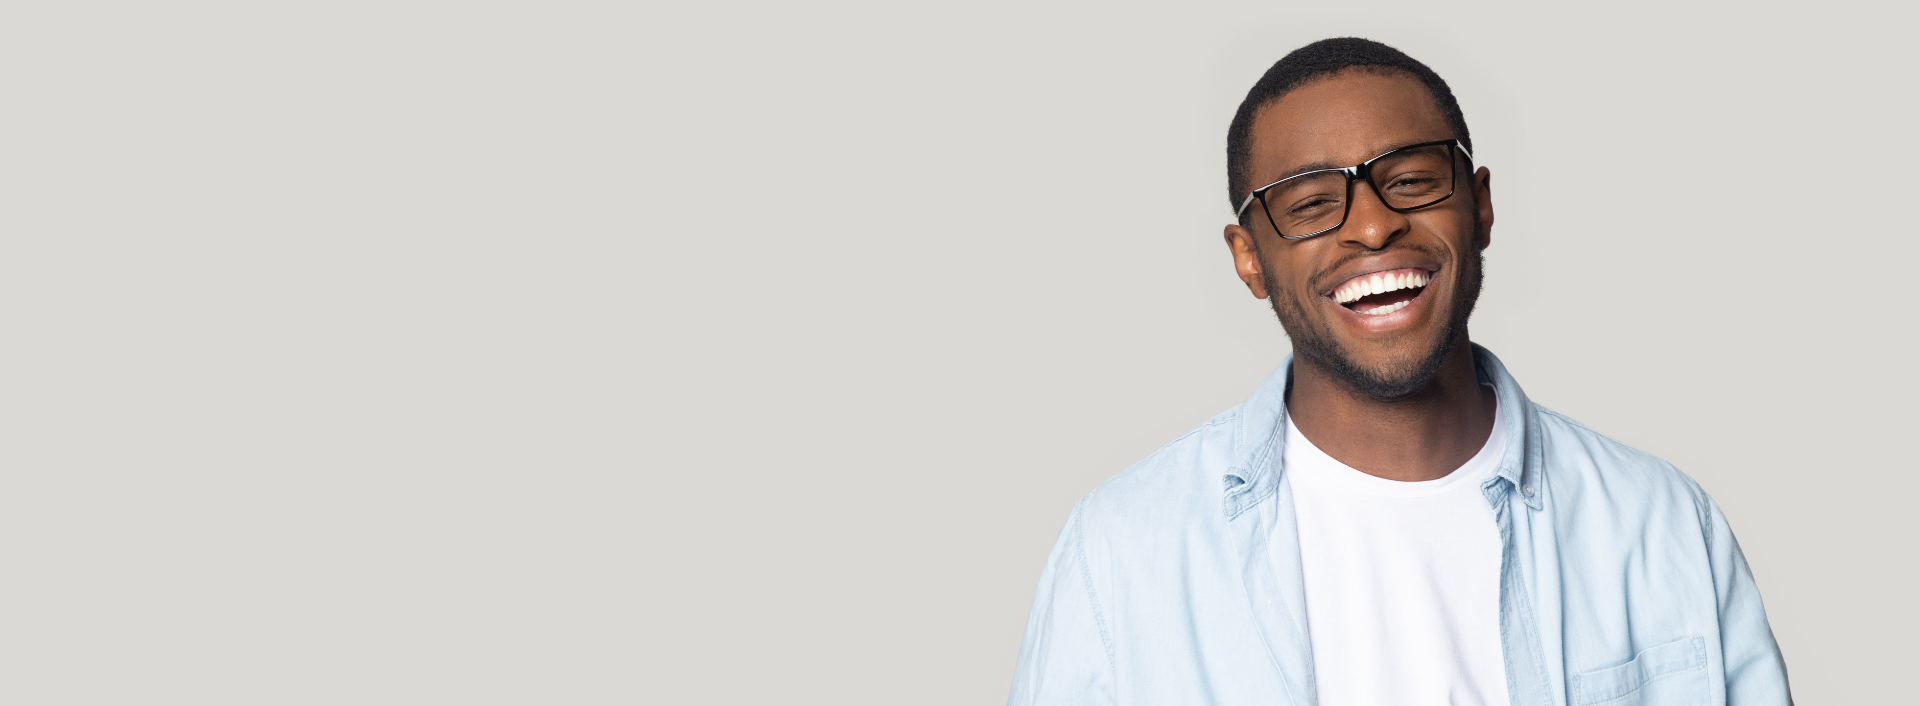 Hudson Orthodontics - Young man smiling wearing glasses